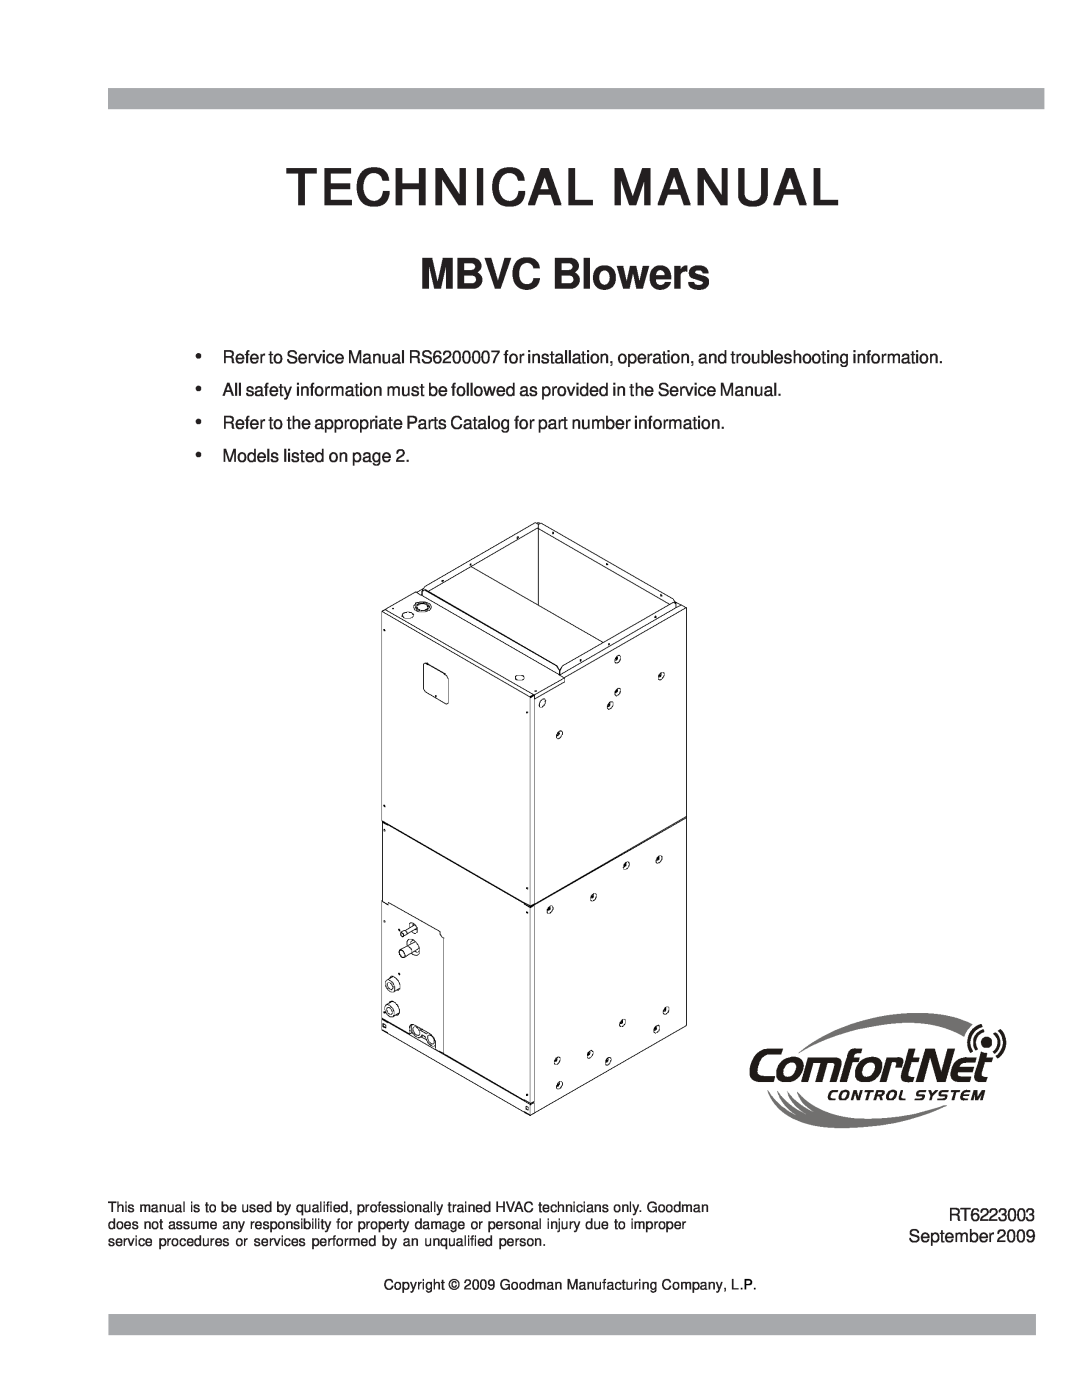 Goodman Mfg RT6223003 service manual Technical Manual, MBVC Blowers 